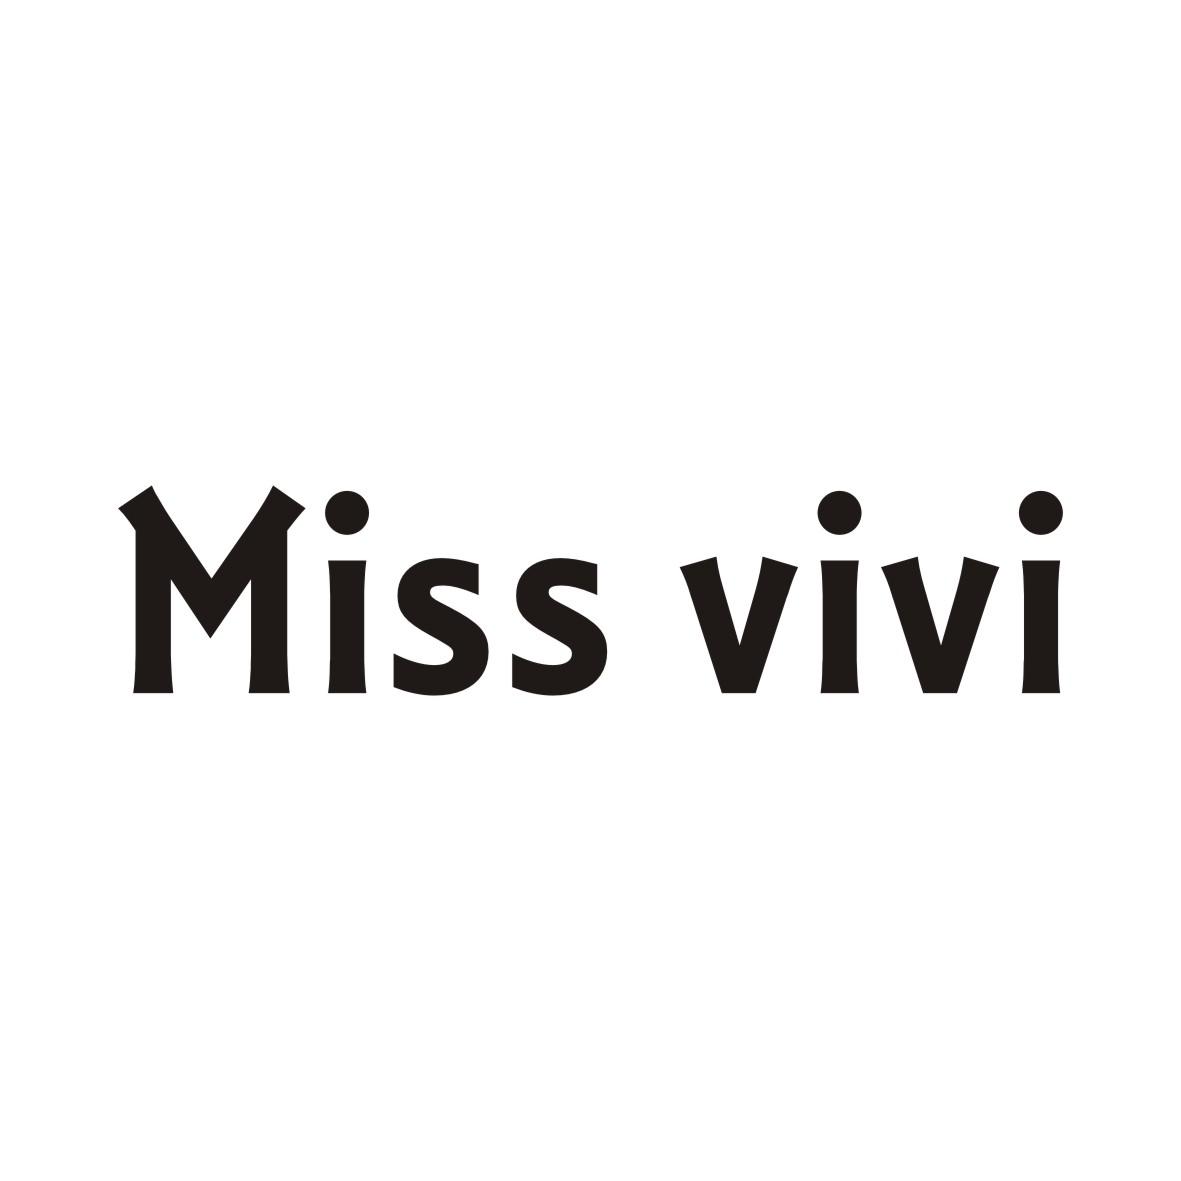 MISS VIVI